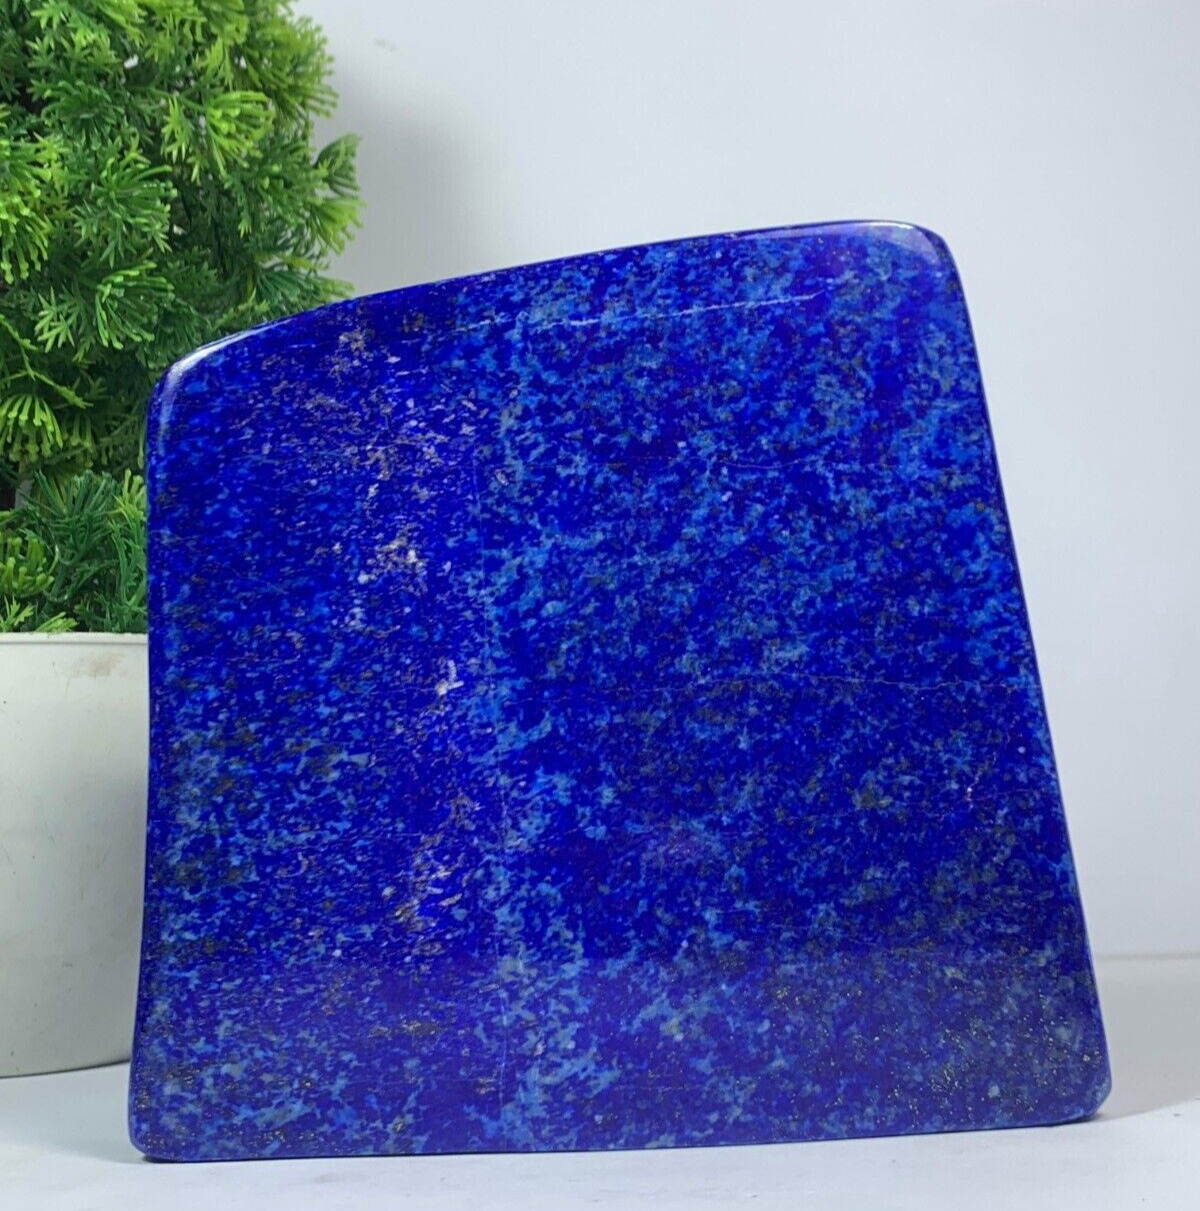 1929Gram Blue Lapis Lazuli Freeform Polished Rough Crystal Slab From Afghanistan